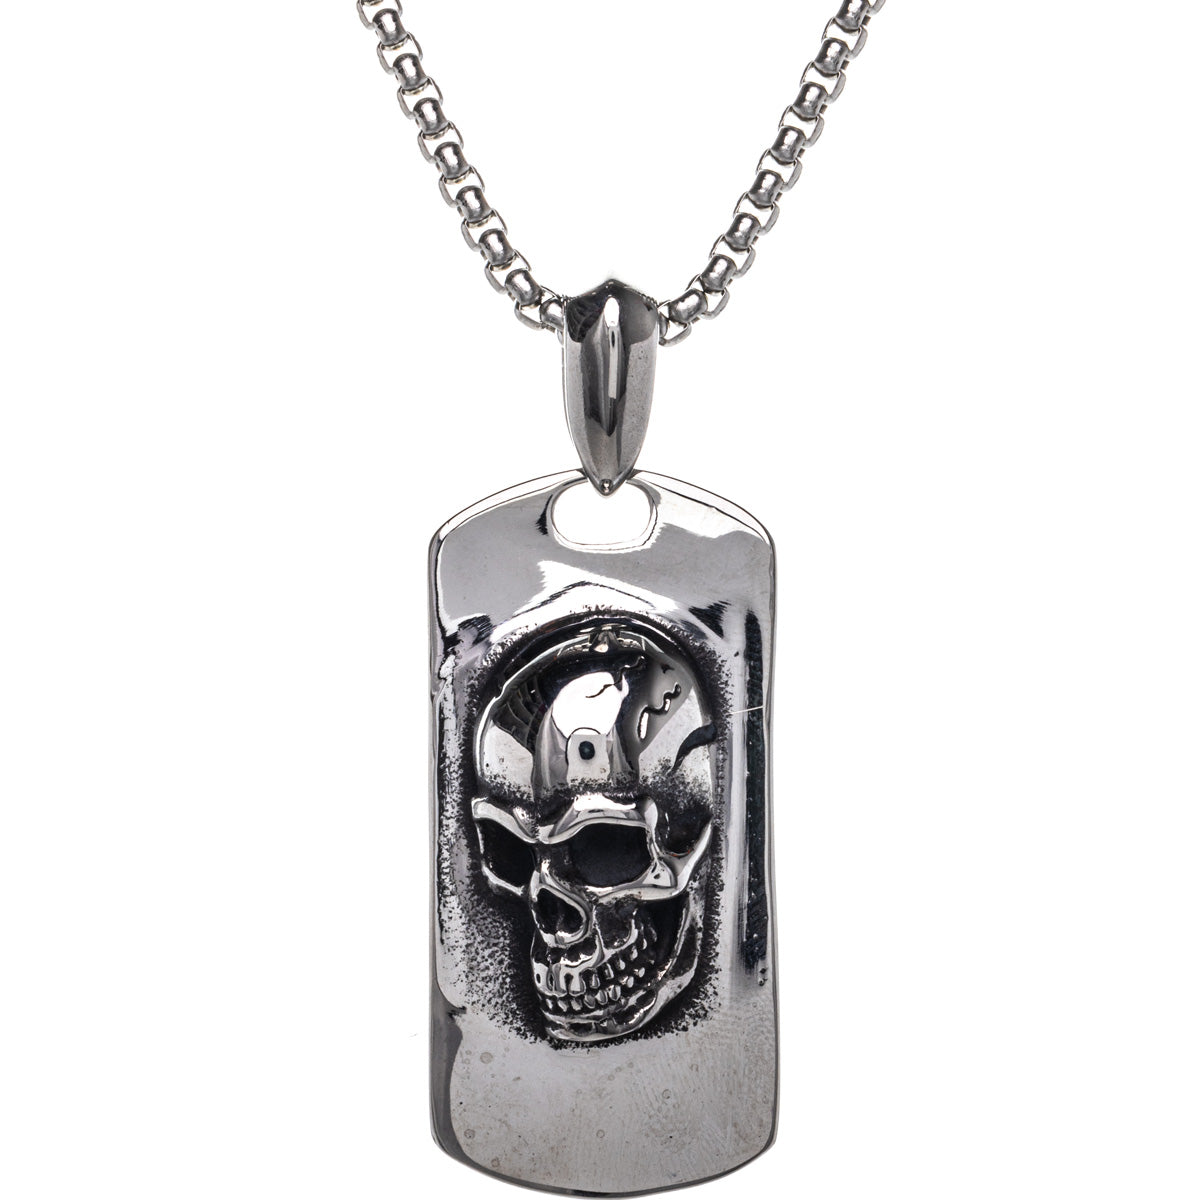 Skull pendant necklace (Steel 316L)